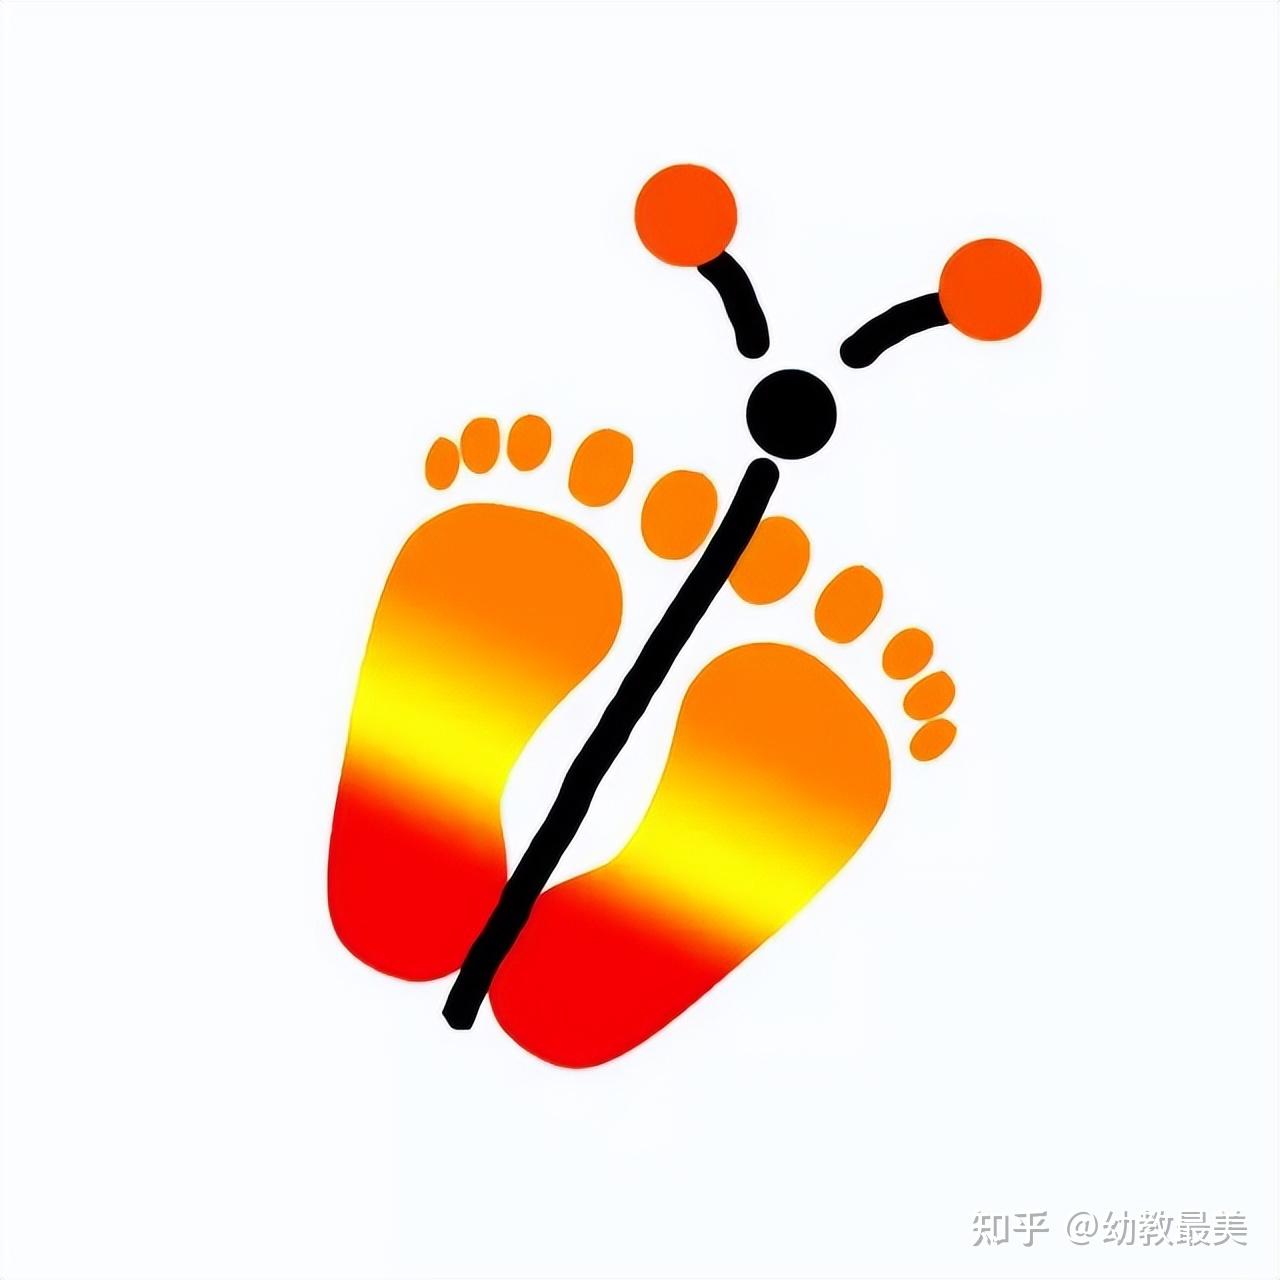 3D脚掌设计图__其他_PSD分层素材_设计图库_昵图网nipic.com